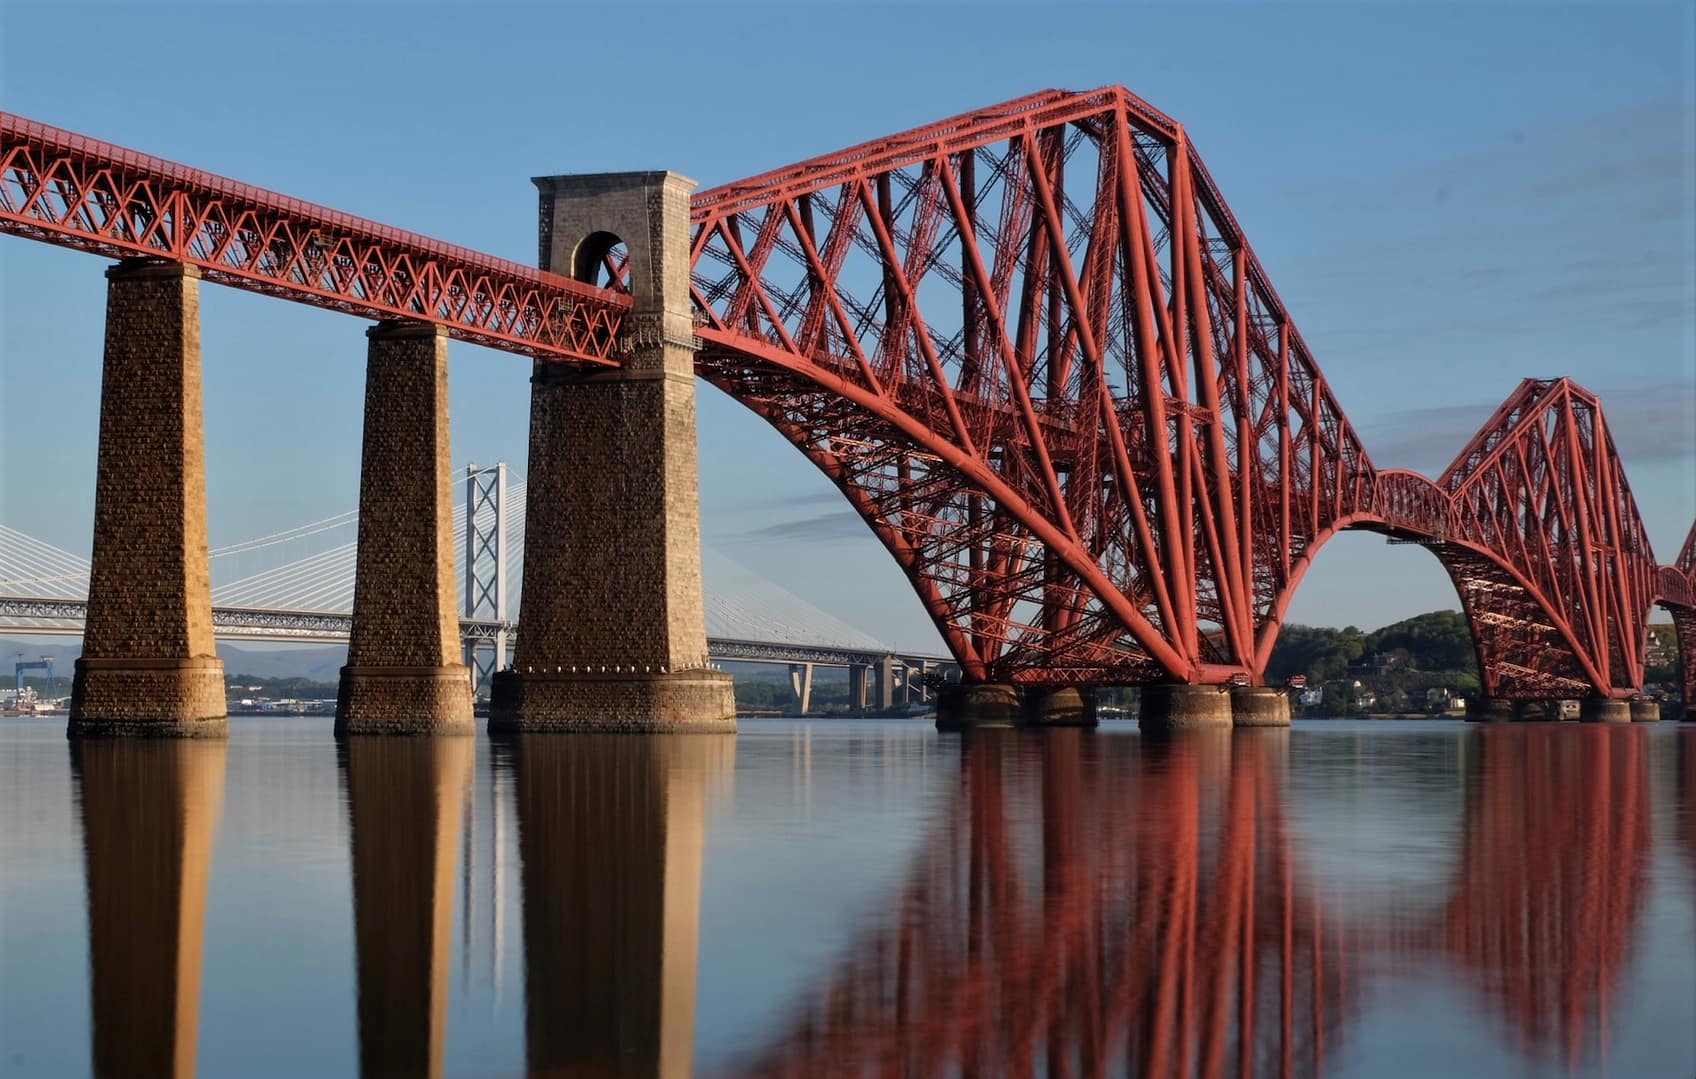 A bridge in Scotland